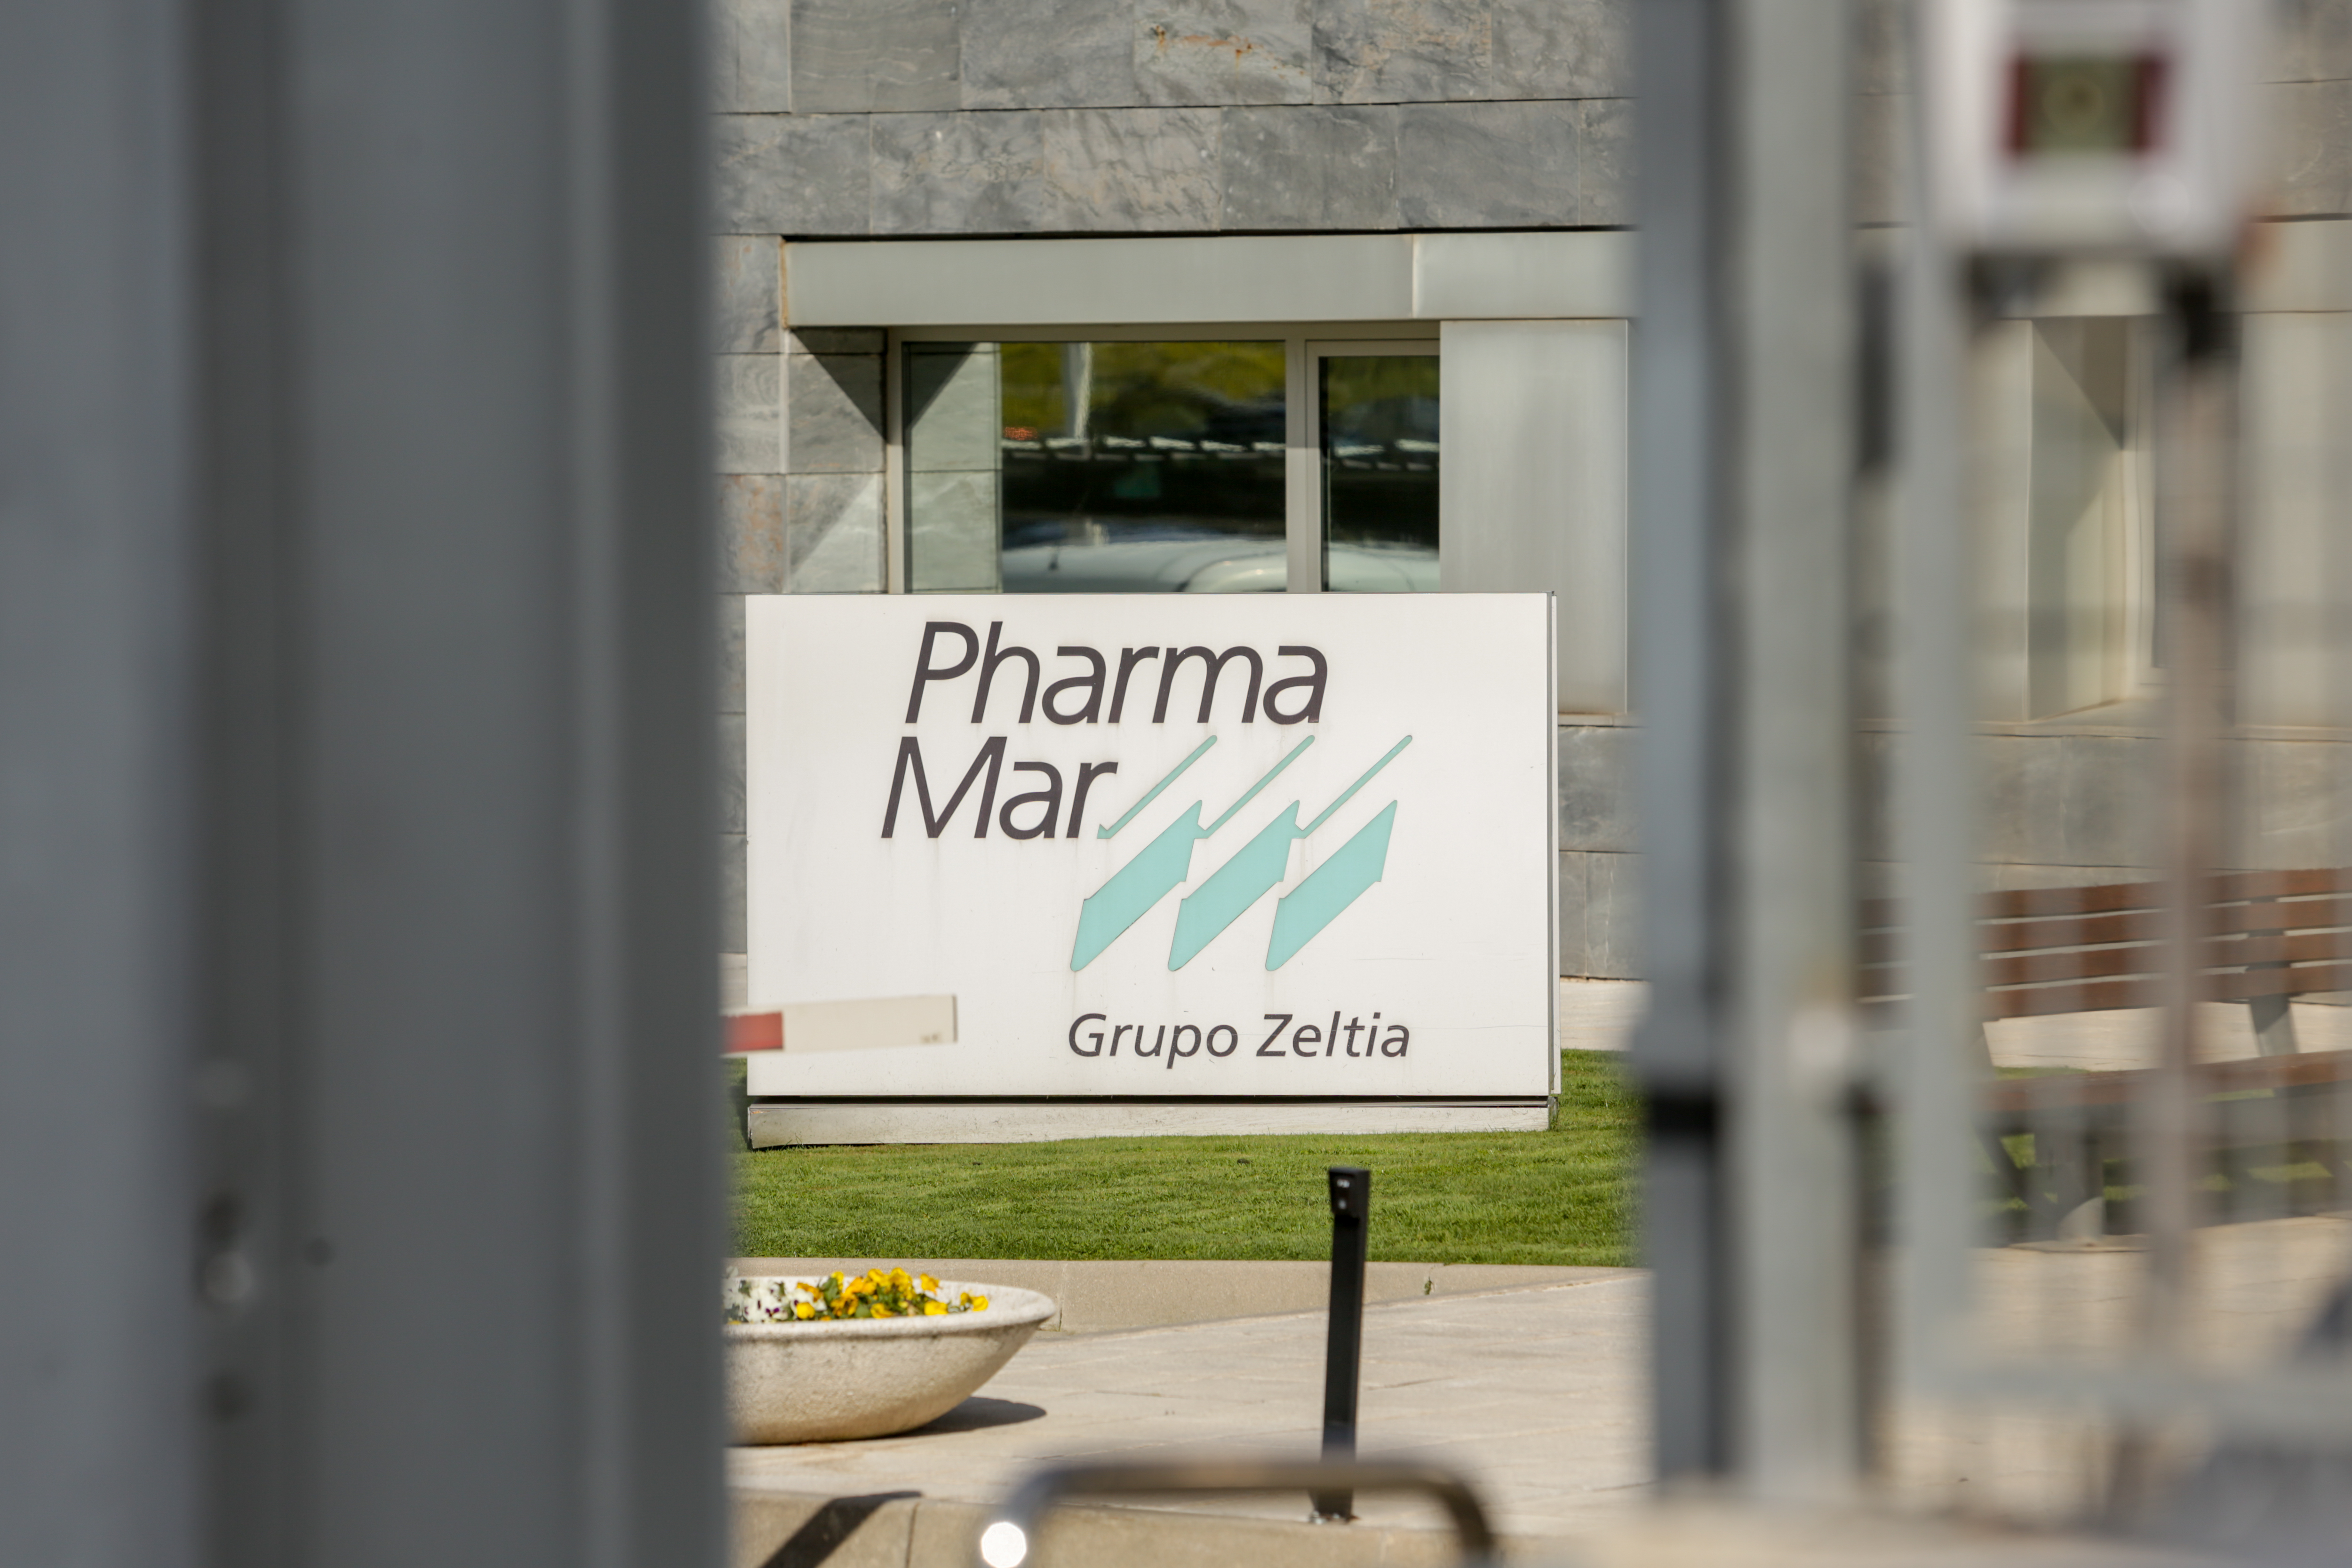 Sede de PharmaMar.
ECONOMIA 
Ricardo Rubio - Europa Press
